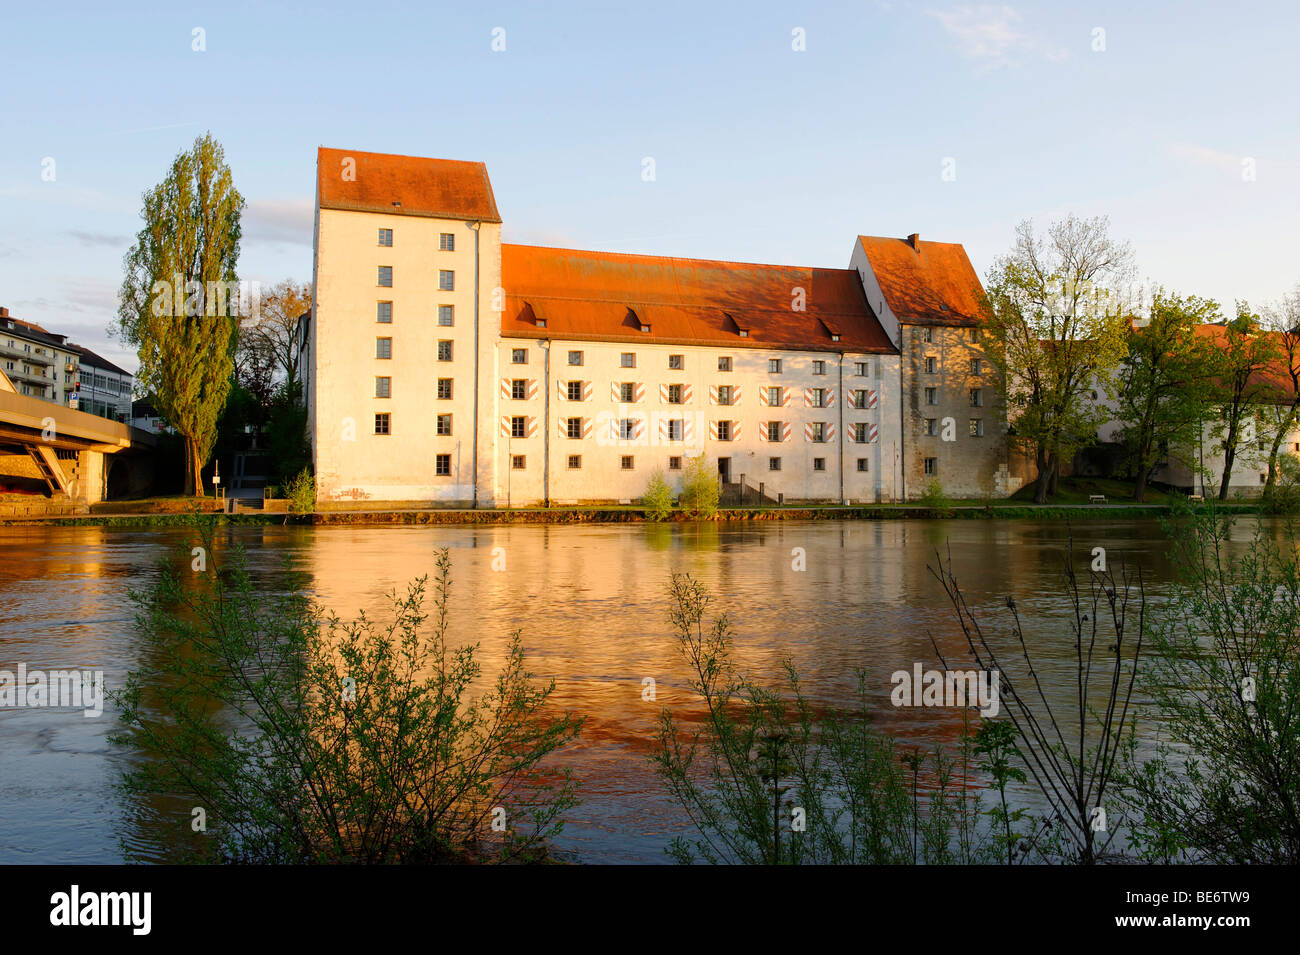 Castle of the dukes of Bavaria above the Danube river, Straubing, Lower Bavaria, Bavaria, Germany, Europe Stock Photo